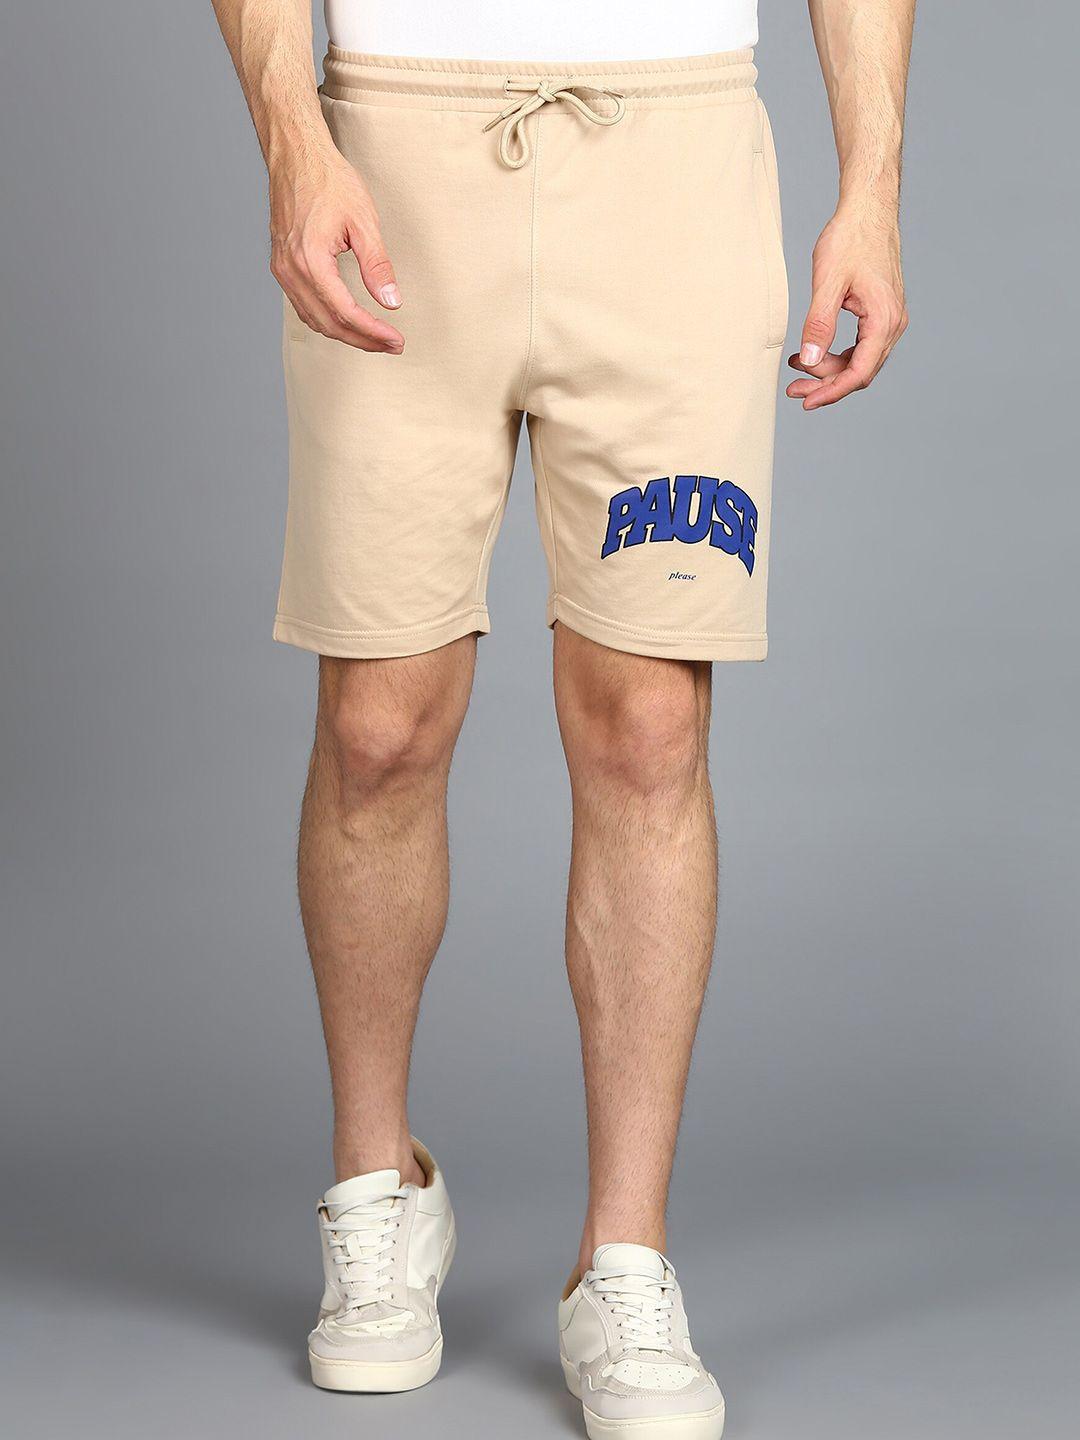 alan jones men mid-rise typography printed casual cotton shorts